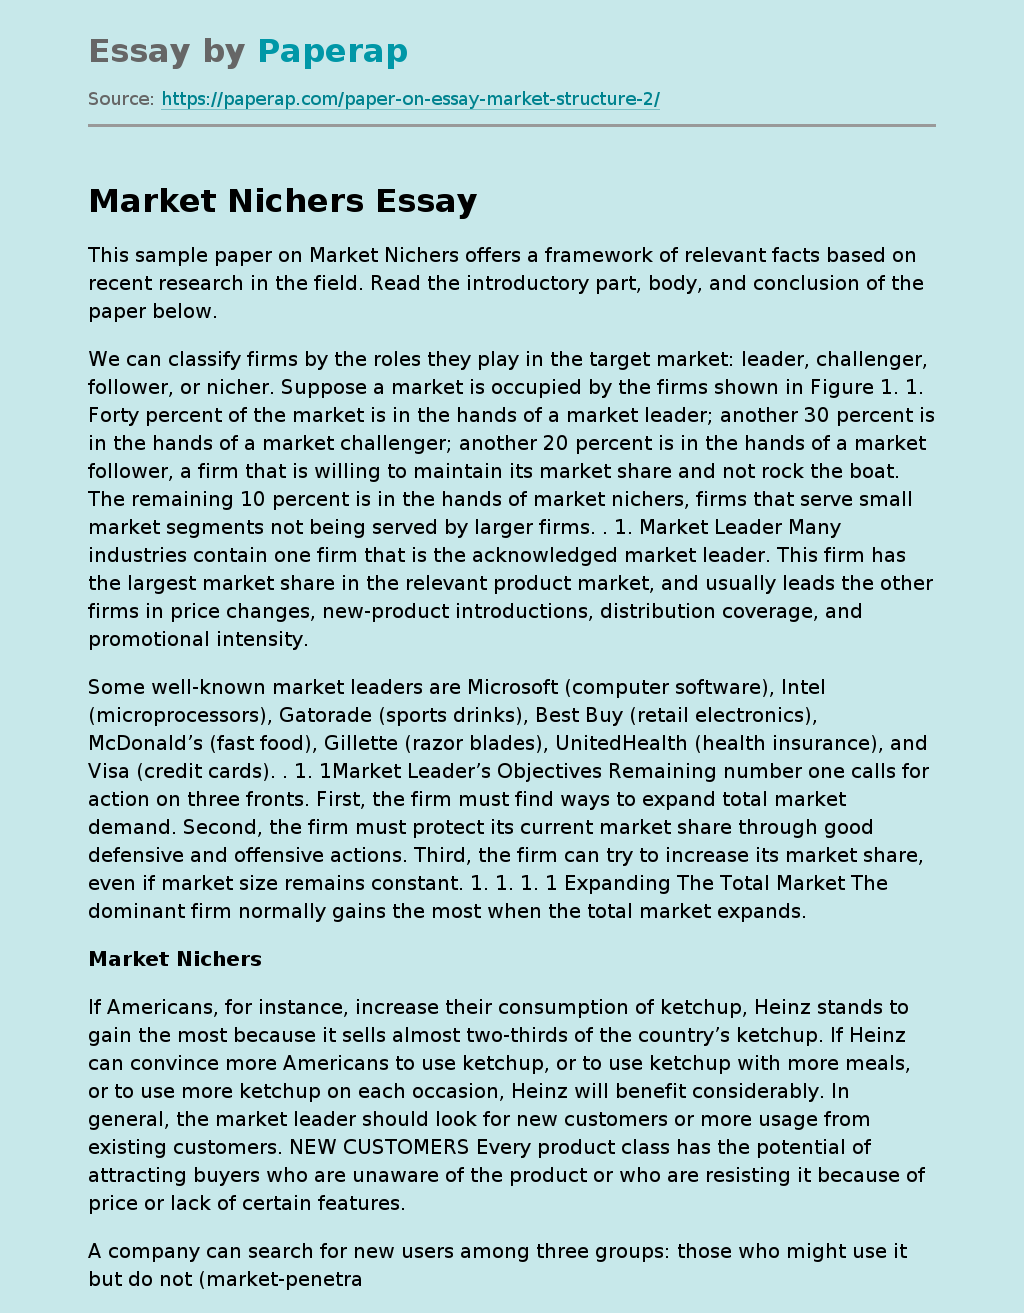 Sample Paper on Market Nichers